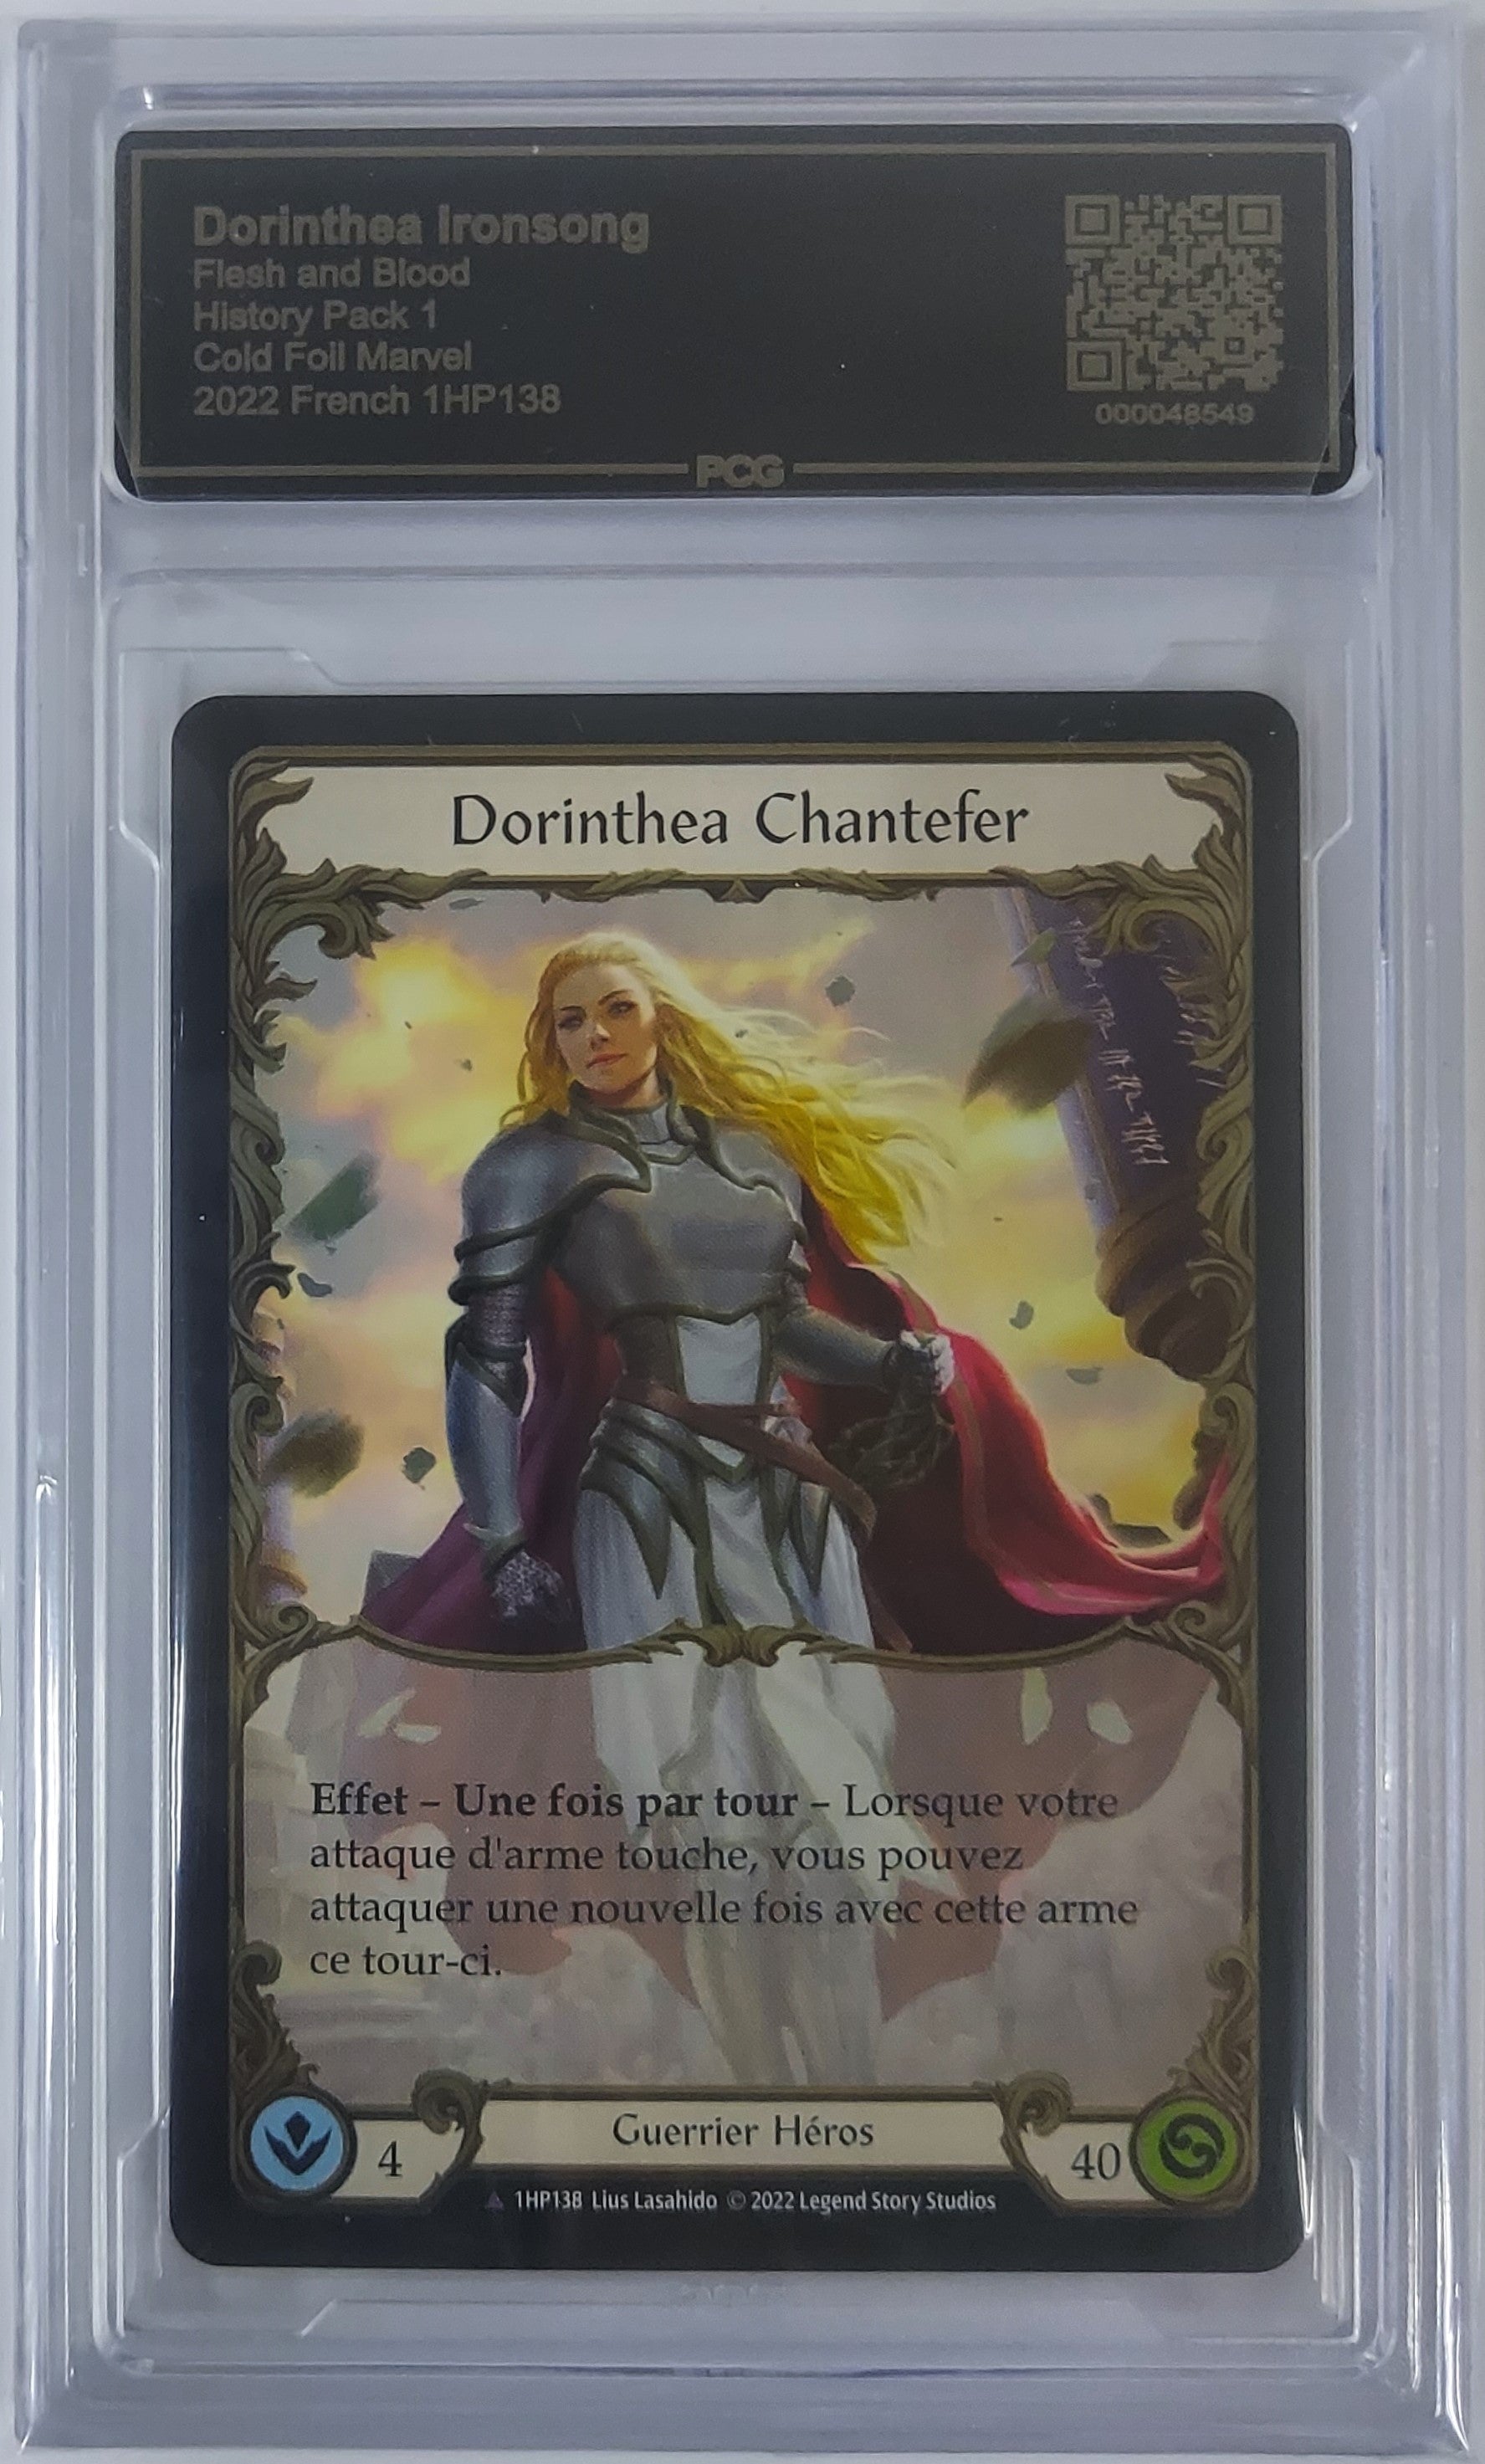 [PCG 9] [Marvel] Dorinthea Ironsong (French) - 1HP138